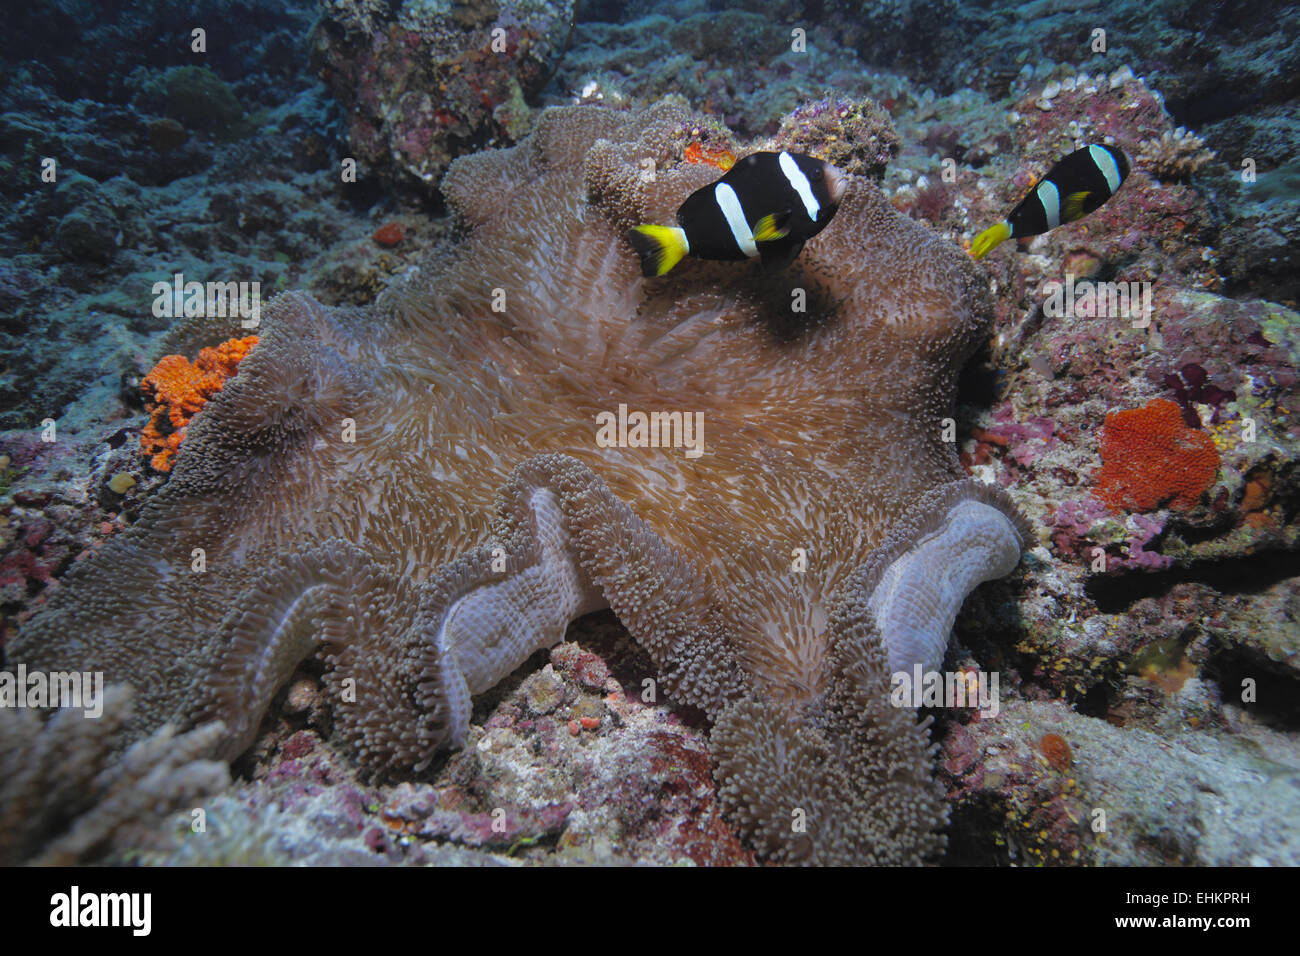 Anemonefish (Amphiprion sebae) in a sea anemone (Heteractis magnifica), Maldives Stock Photo